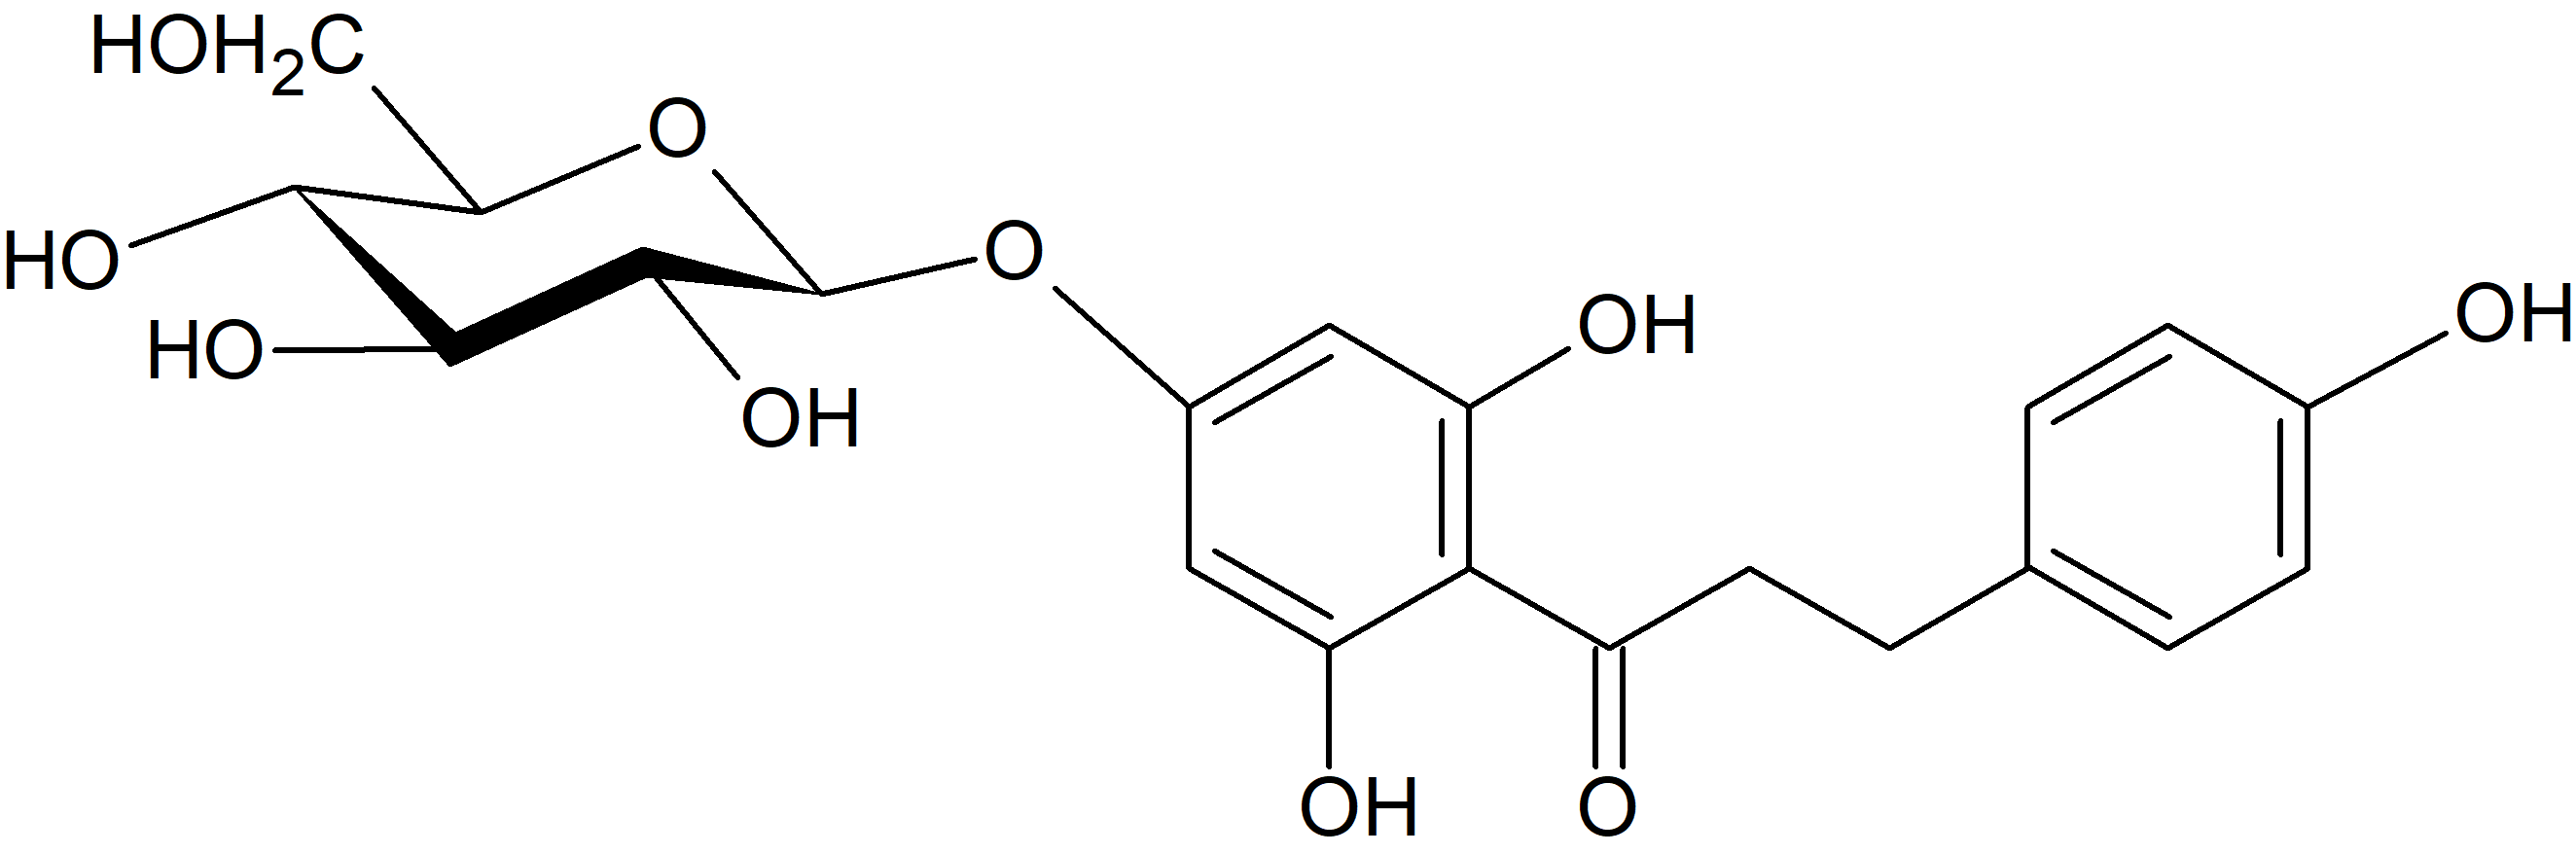 Phloretin 4'-O-glucoside